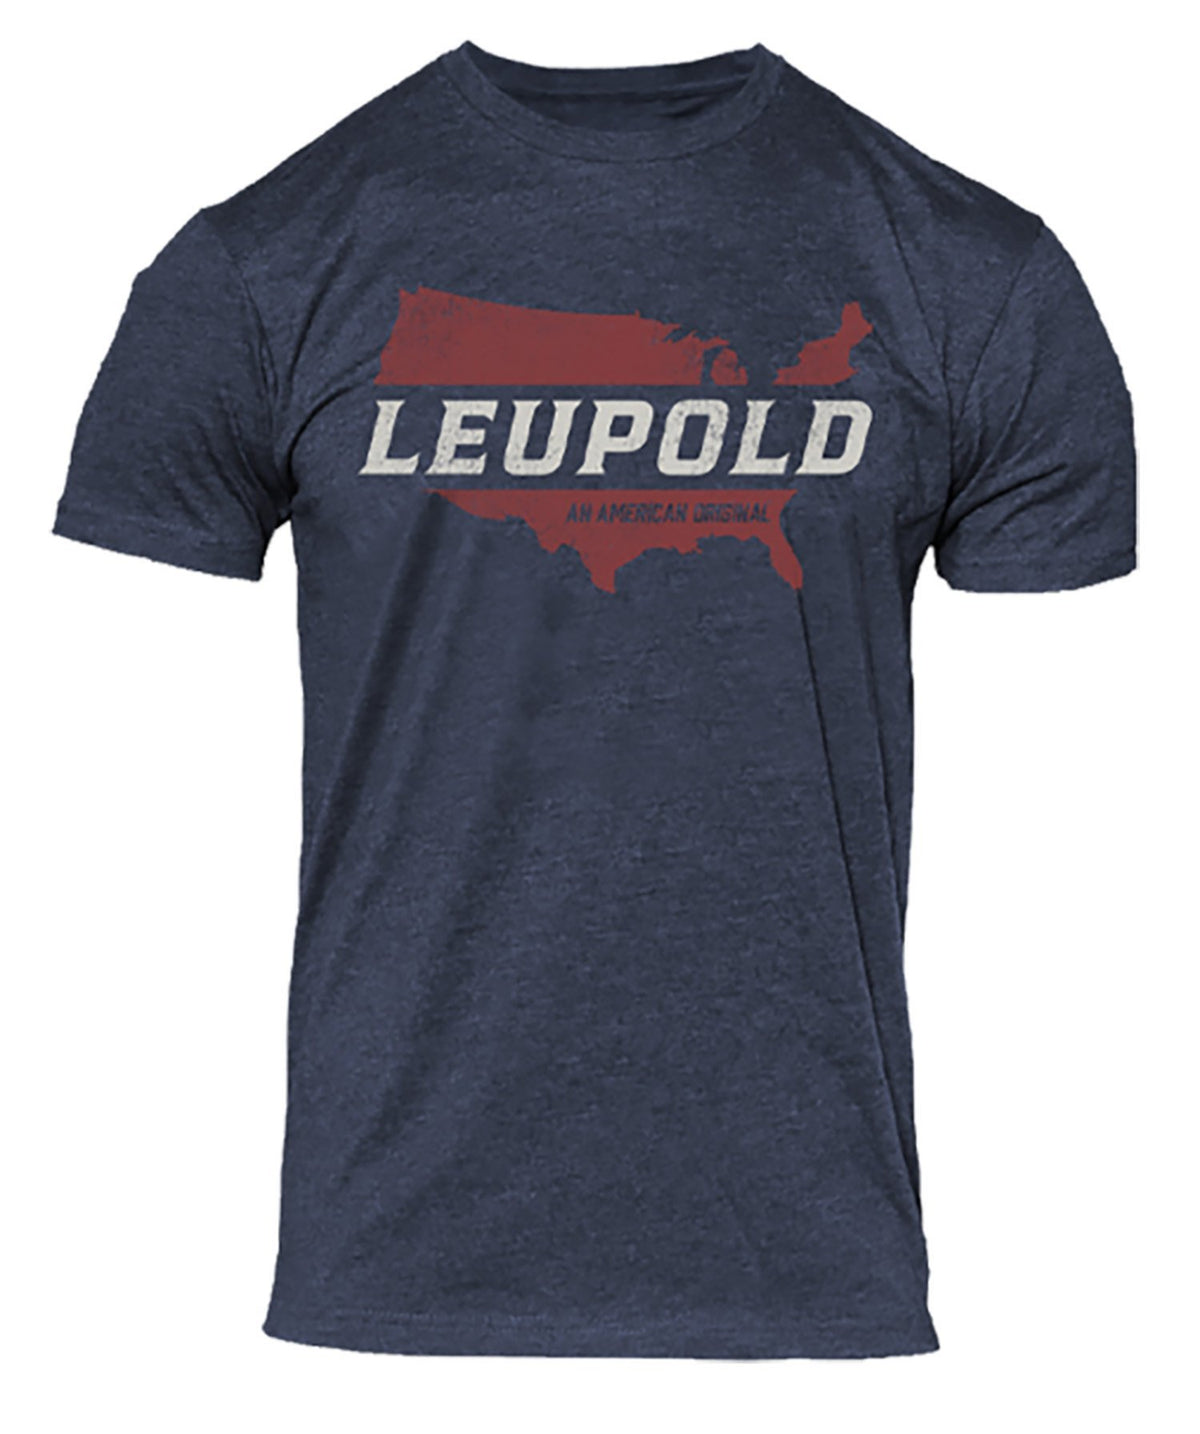 Leupold American Original T-Shirt Navy Heather Large Short Sleeve - Pacific Flyway Supplies